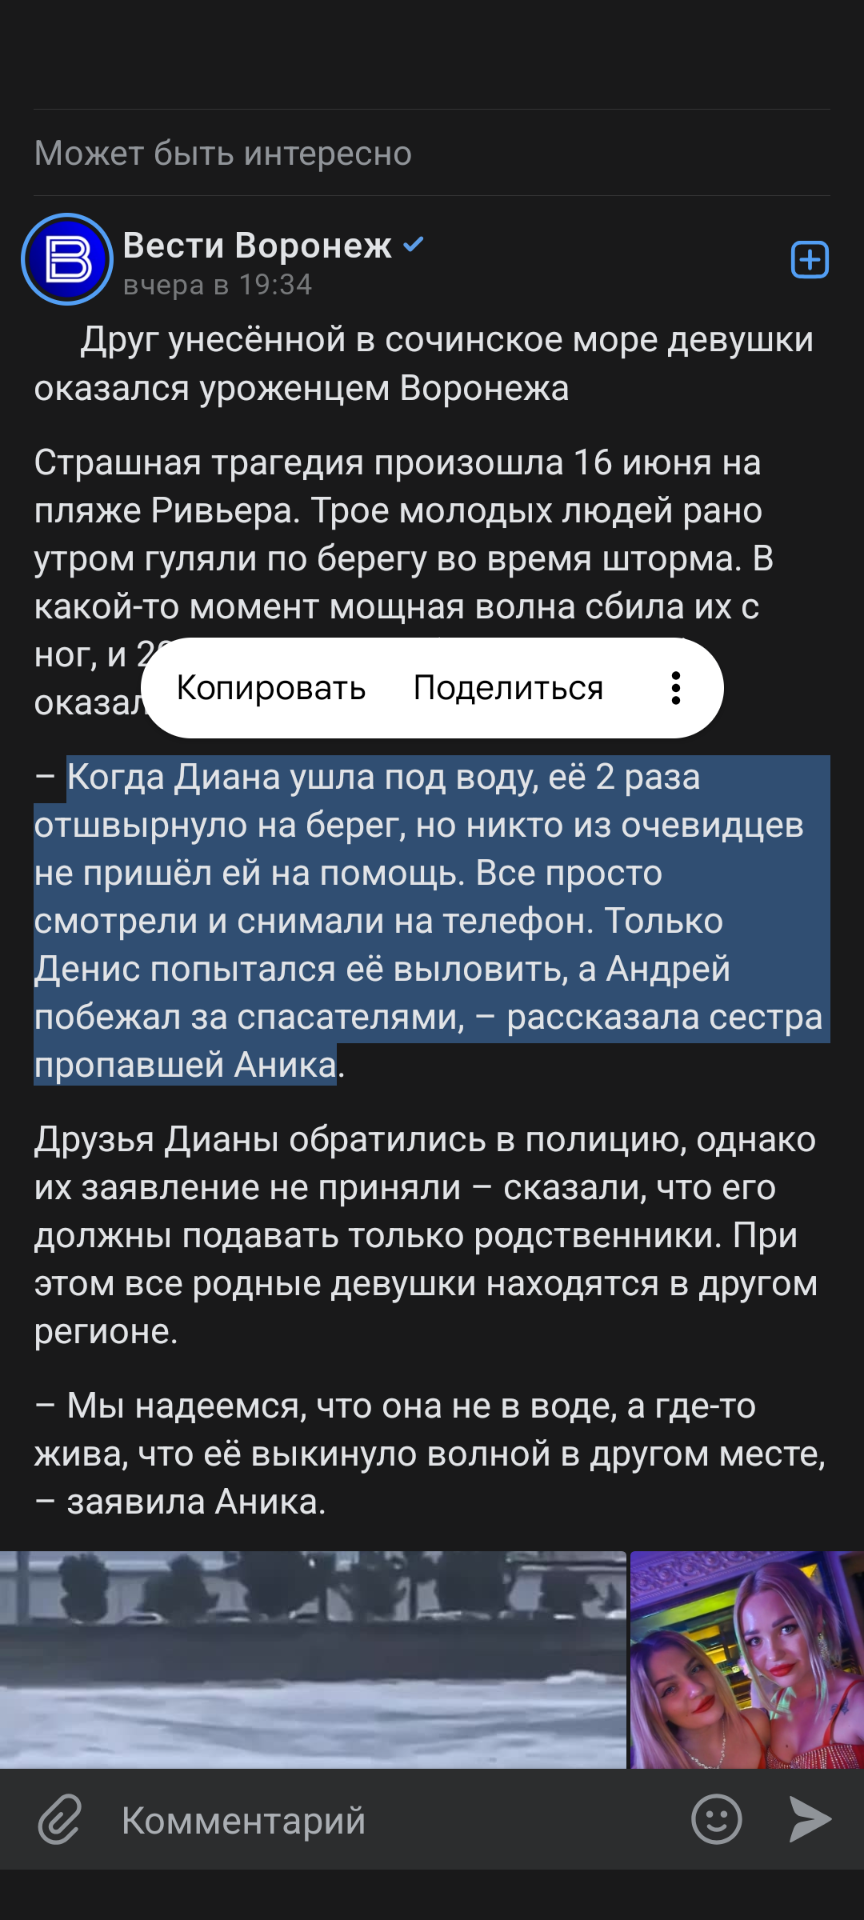 What's on the minds of Vesti Voronezh journalists??? - Journalists, Drowned, Sochi, Video, Video VK, VKontakte (link), Longpost